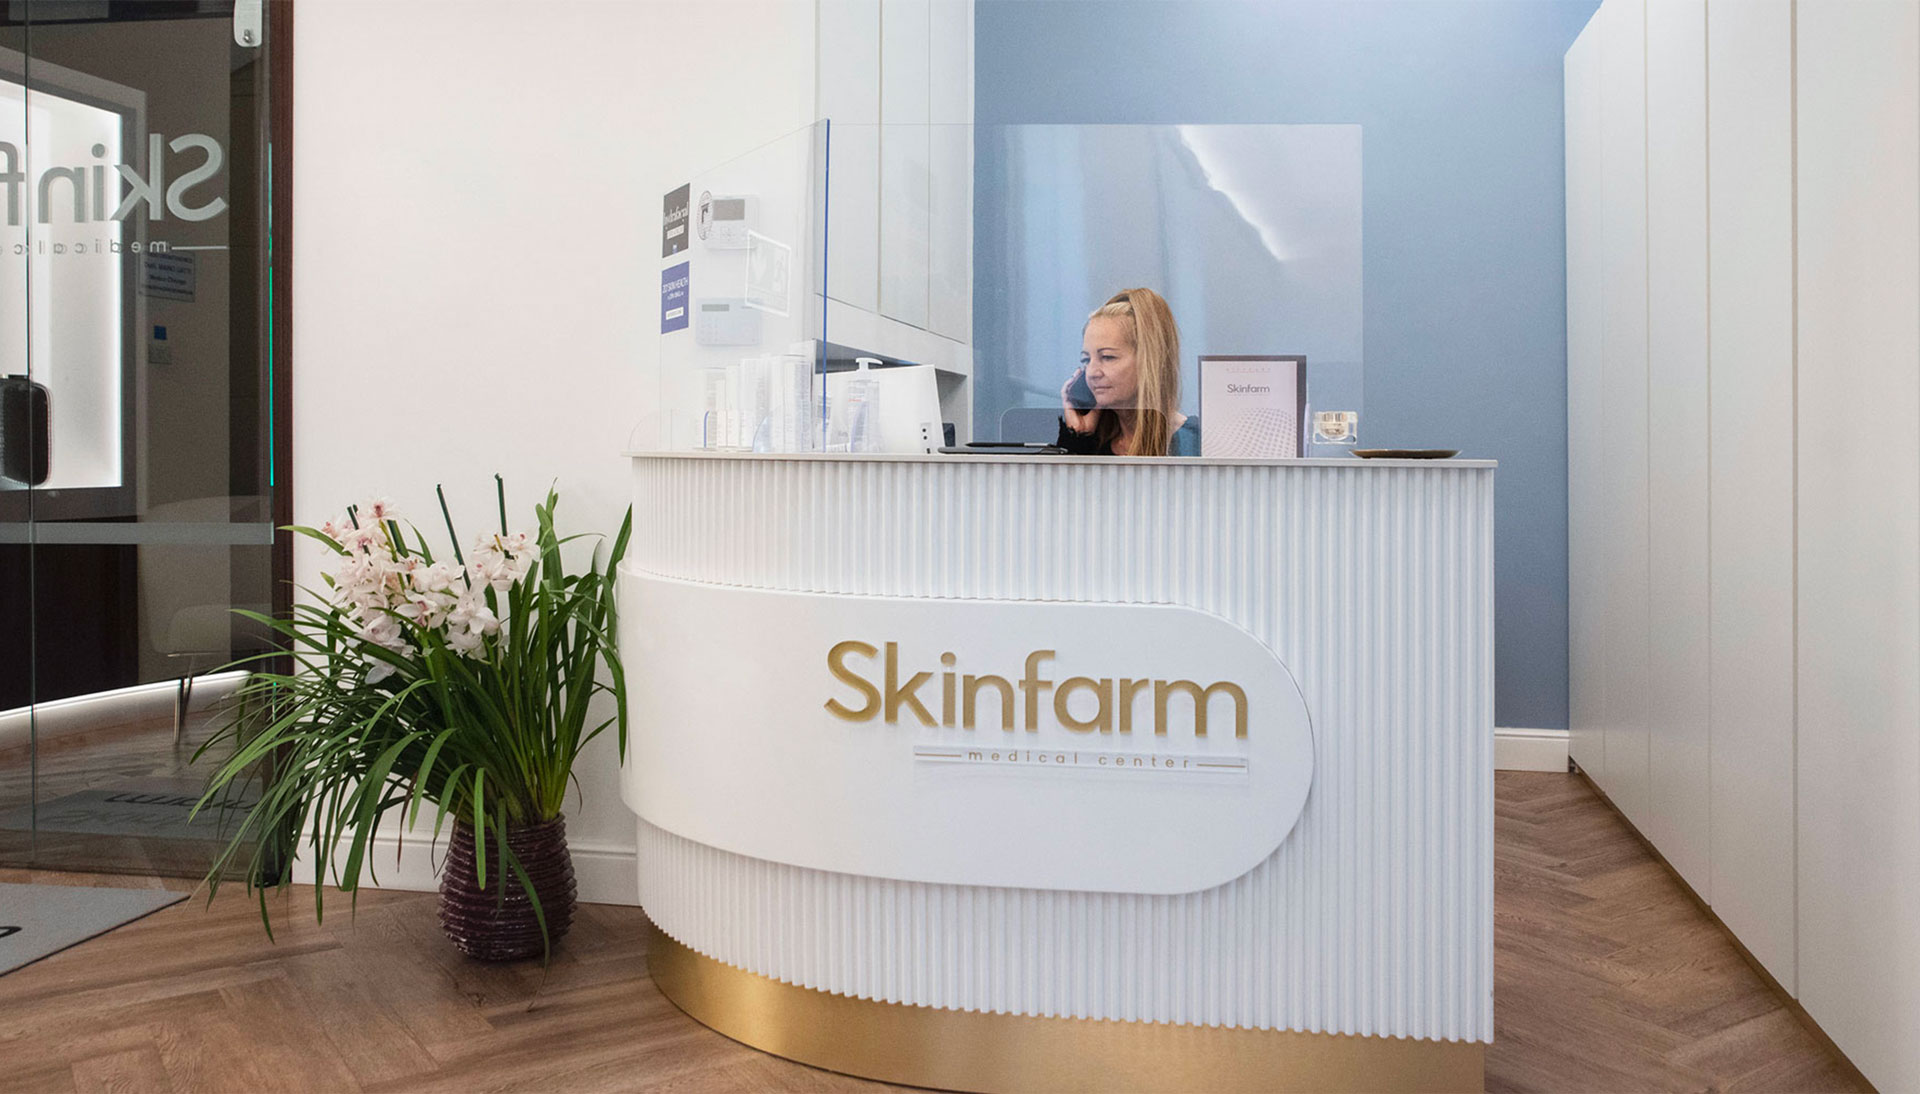 skinfarm-medical-center